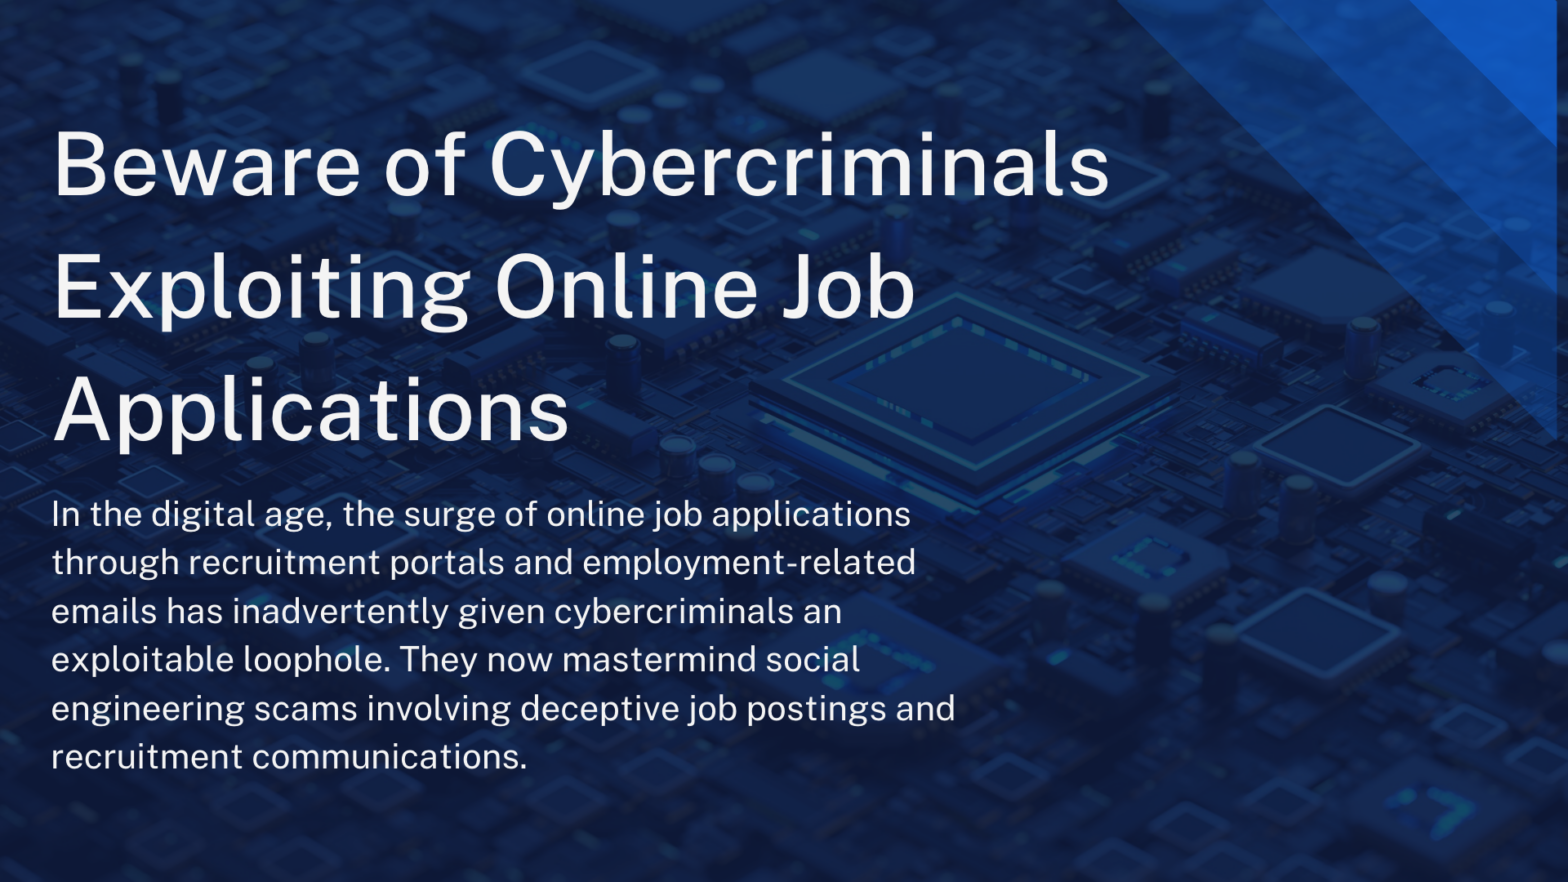 Beware of Cybercriminals Exploiting Online Job Applications